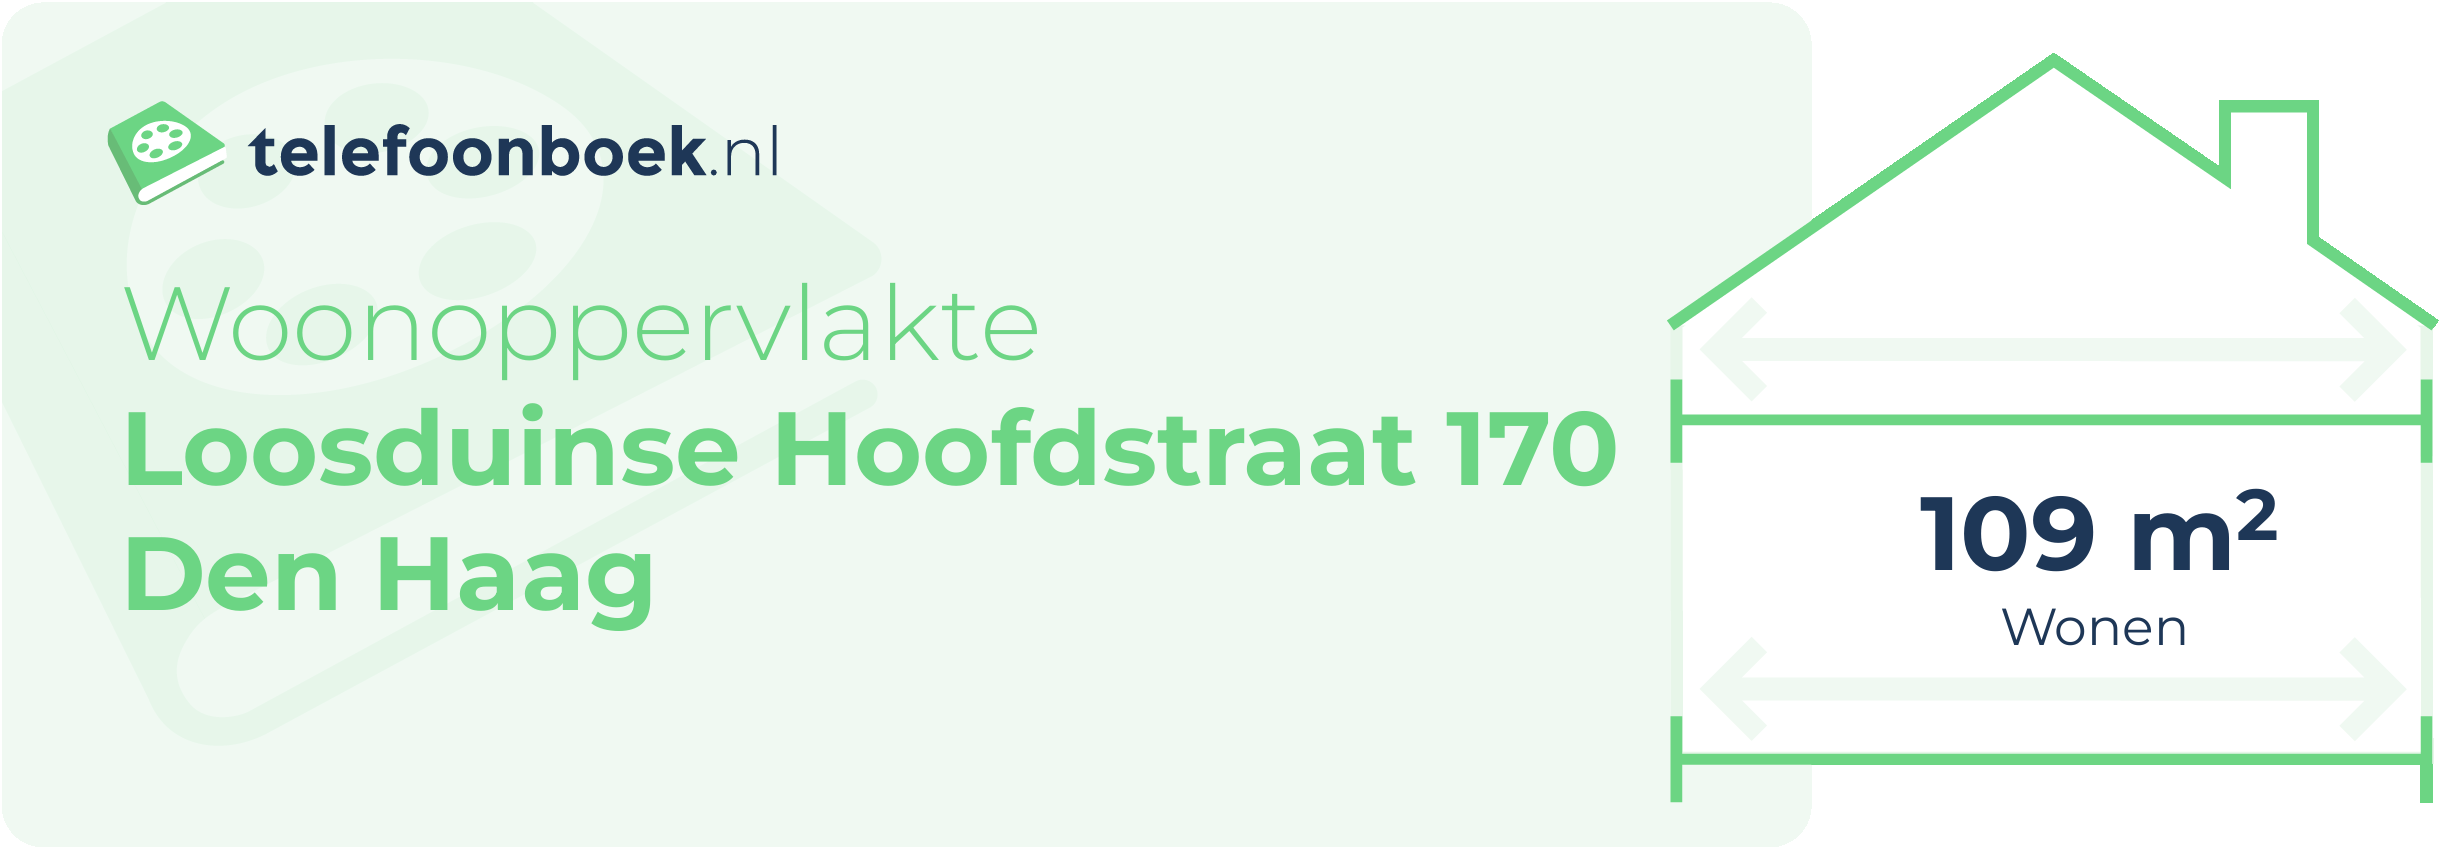 Woonoppervlakte Loosduinse Hoofdstraat 170 Den Haag